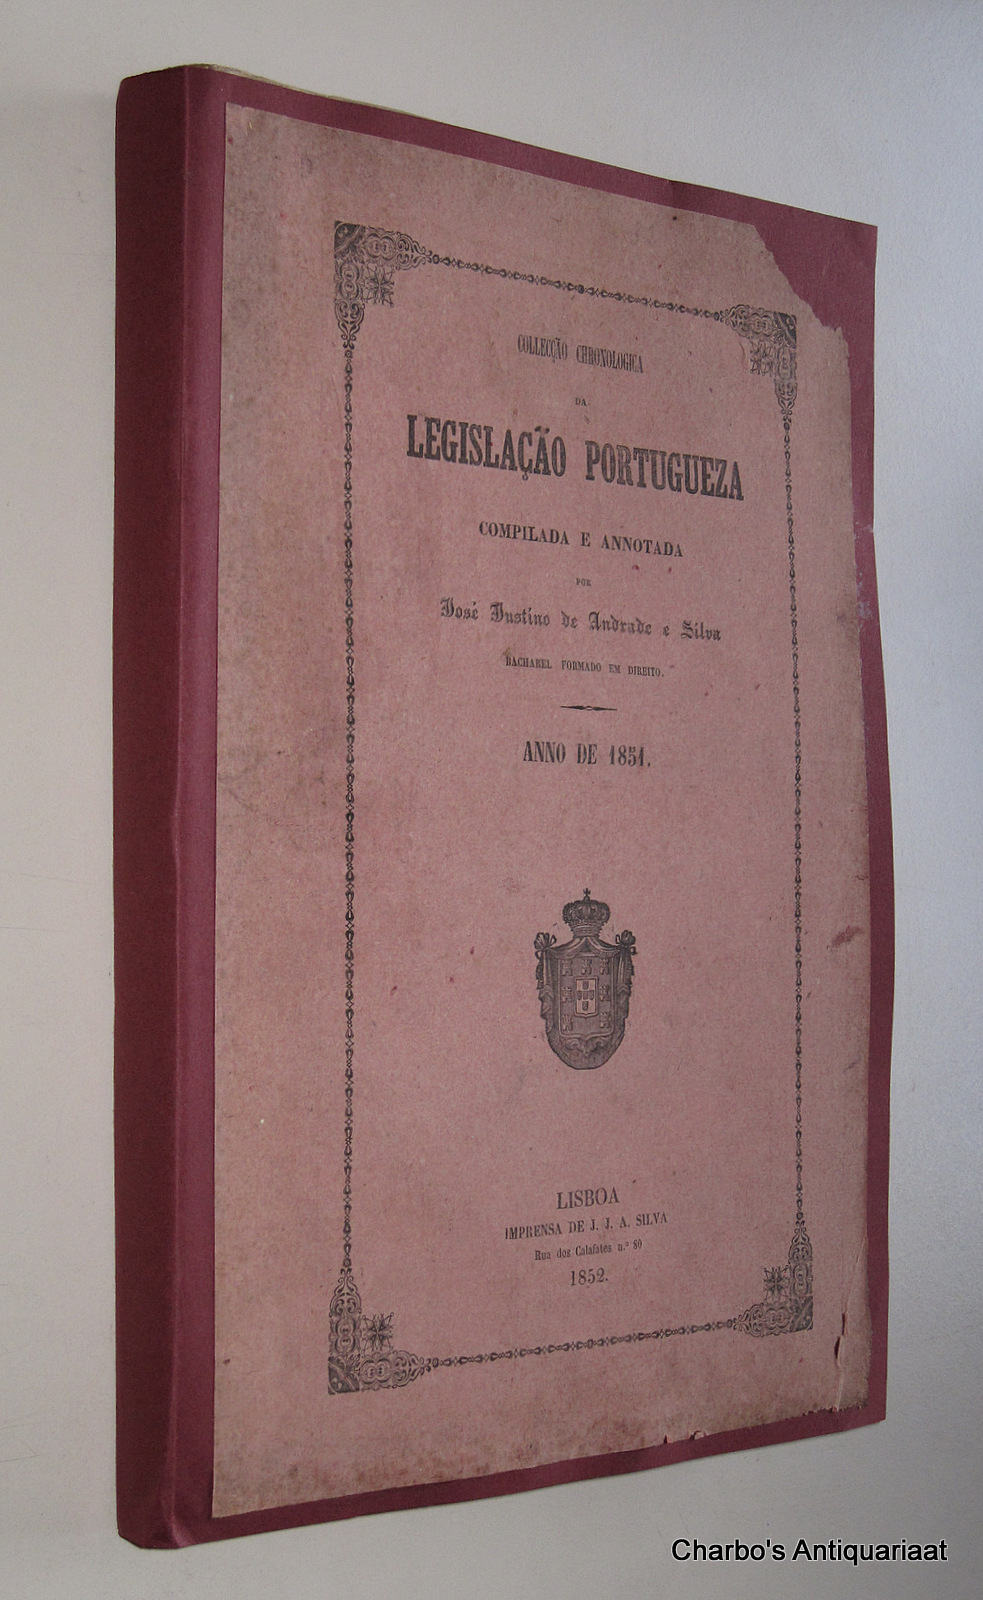 N/A, -  Colleco chronologica da legislao portugueza, anno de 1851. Compilada e annotada por Jos Justino de Andrade e Silva.